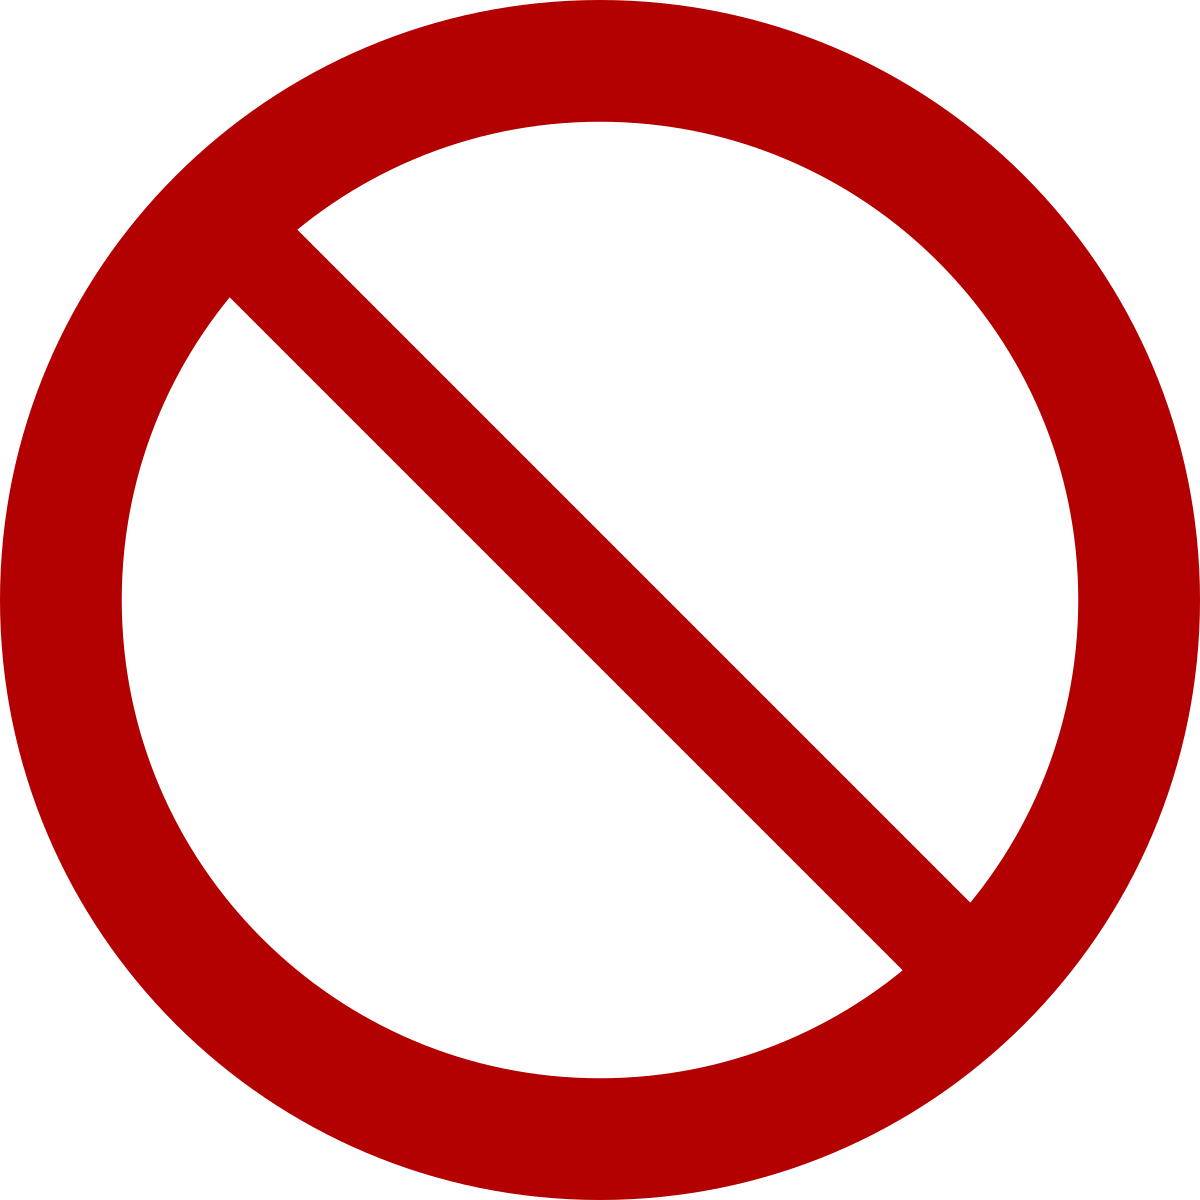 Do not - sign